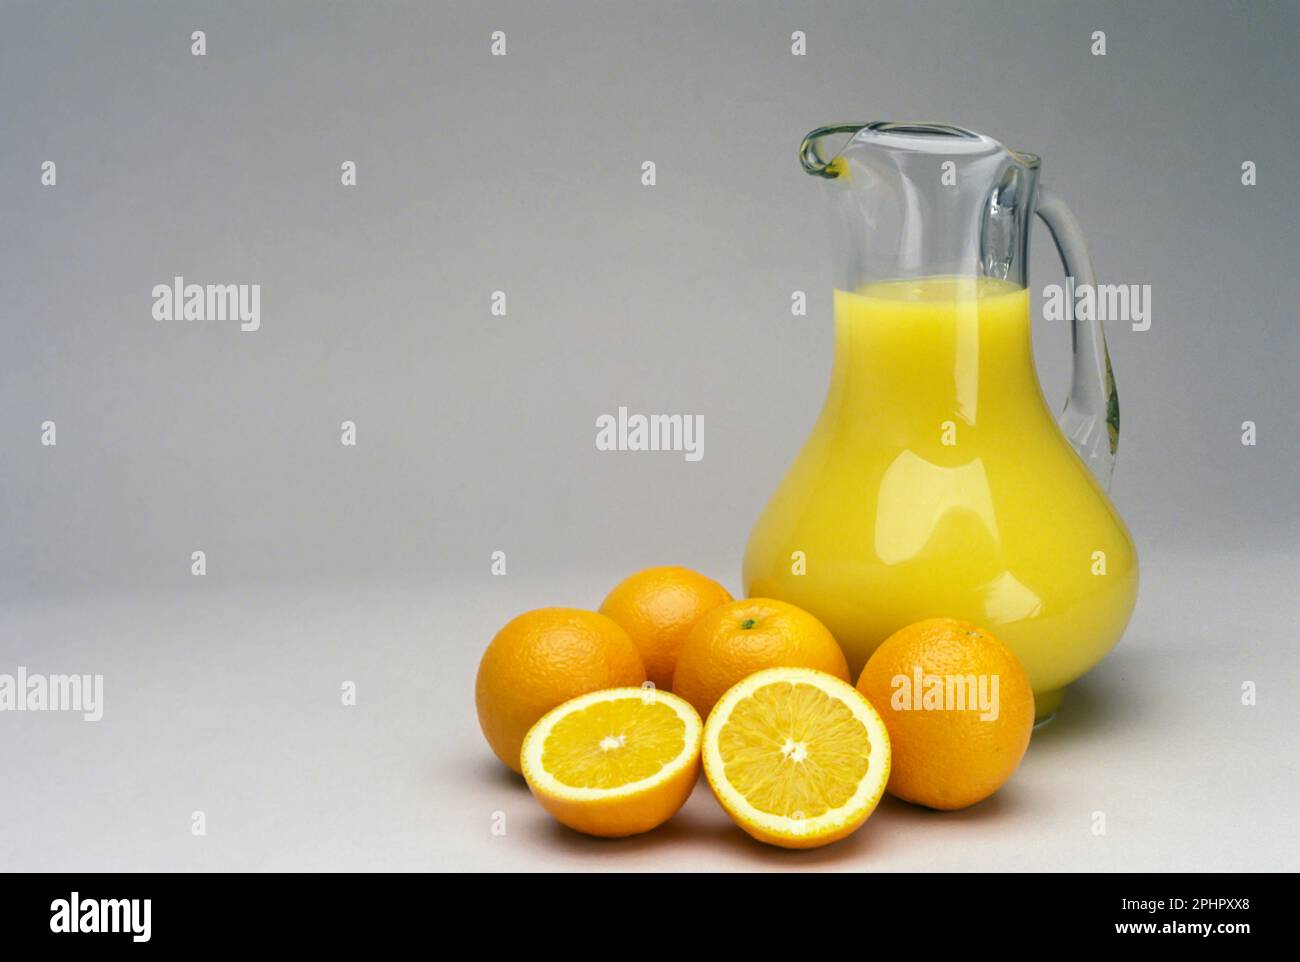 https://c8.alamy.com/comp/2PHPXX8/pitcher-of-orange-juice-on-white-background-2PHPXX8.jpg